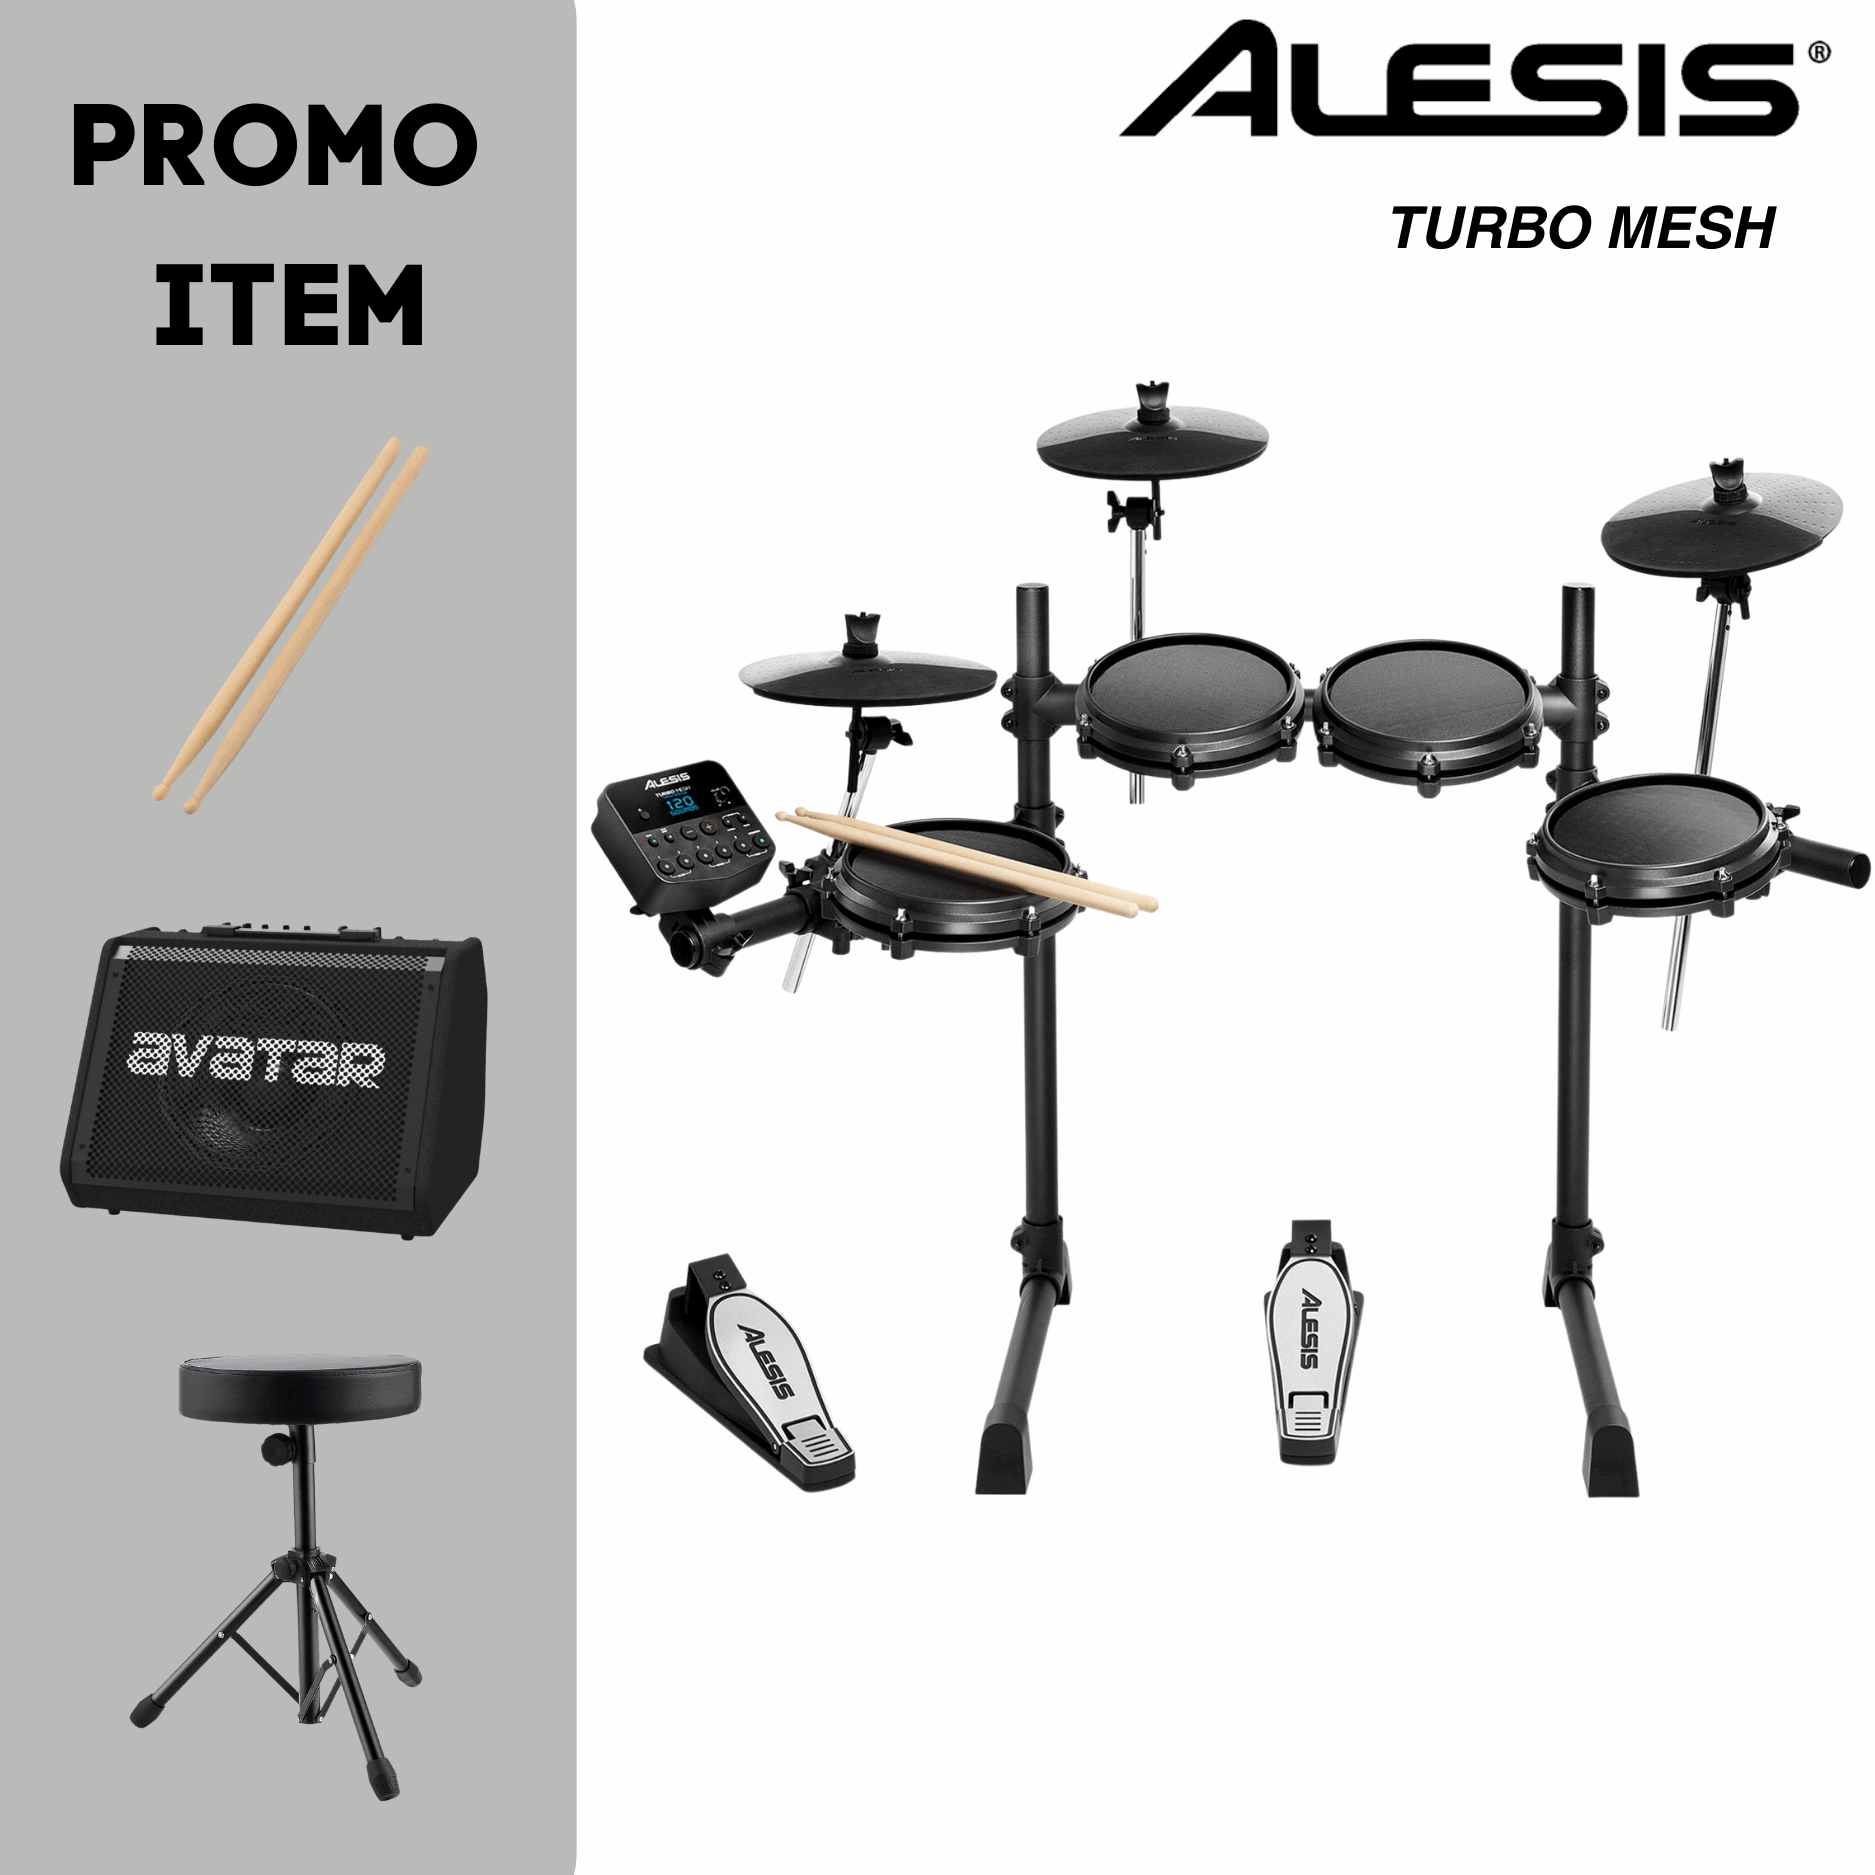 Alesis Turbo Mesh with Promo items Zoso Music